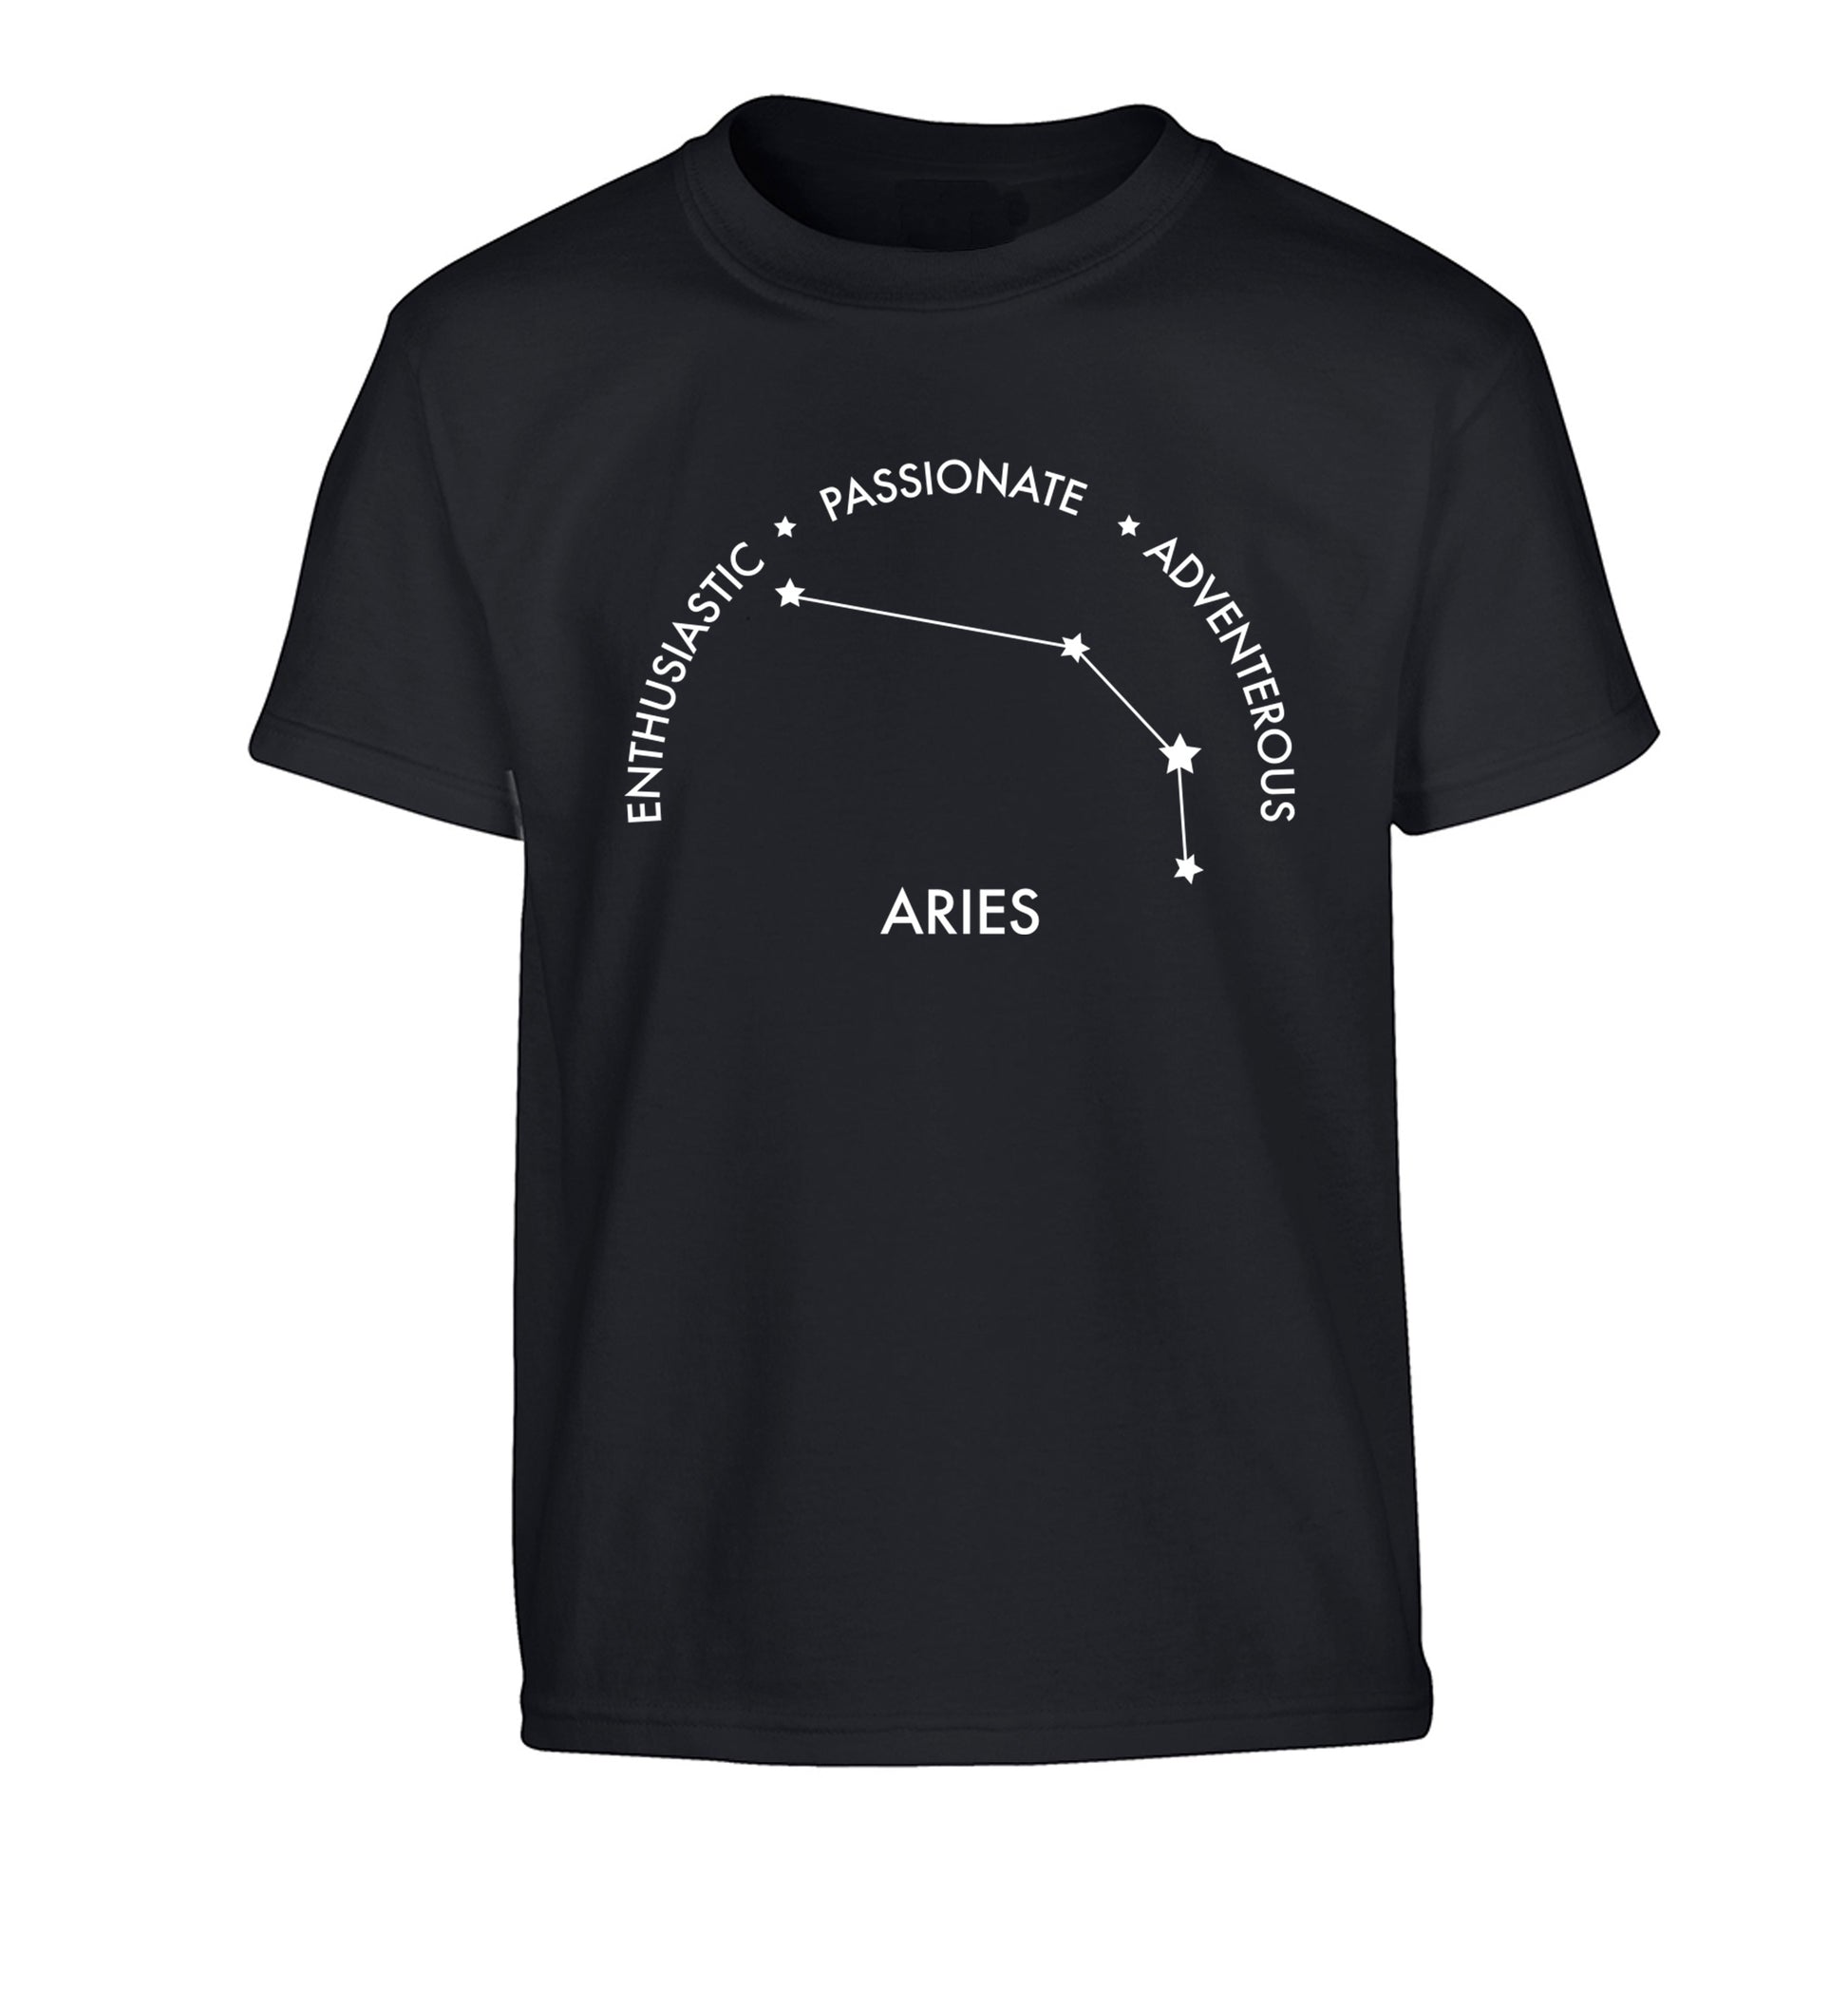 Aries enthusiastic | passionate | adventerous Children's black Tshirt 12-13 Years